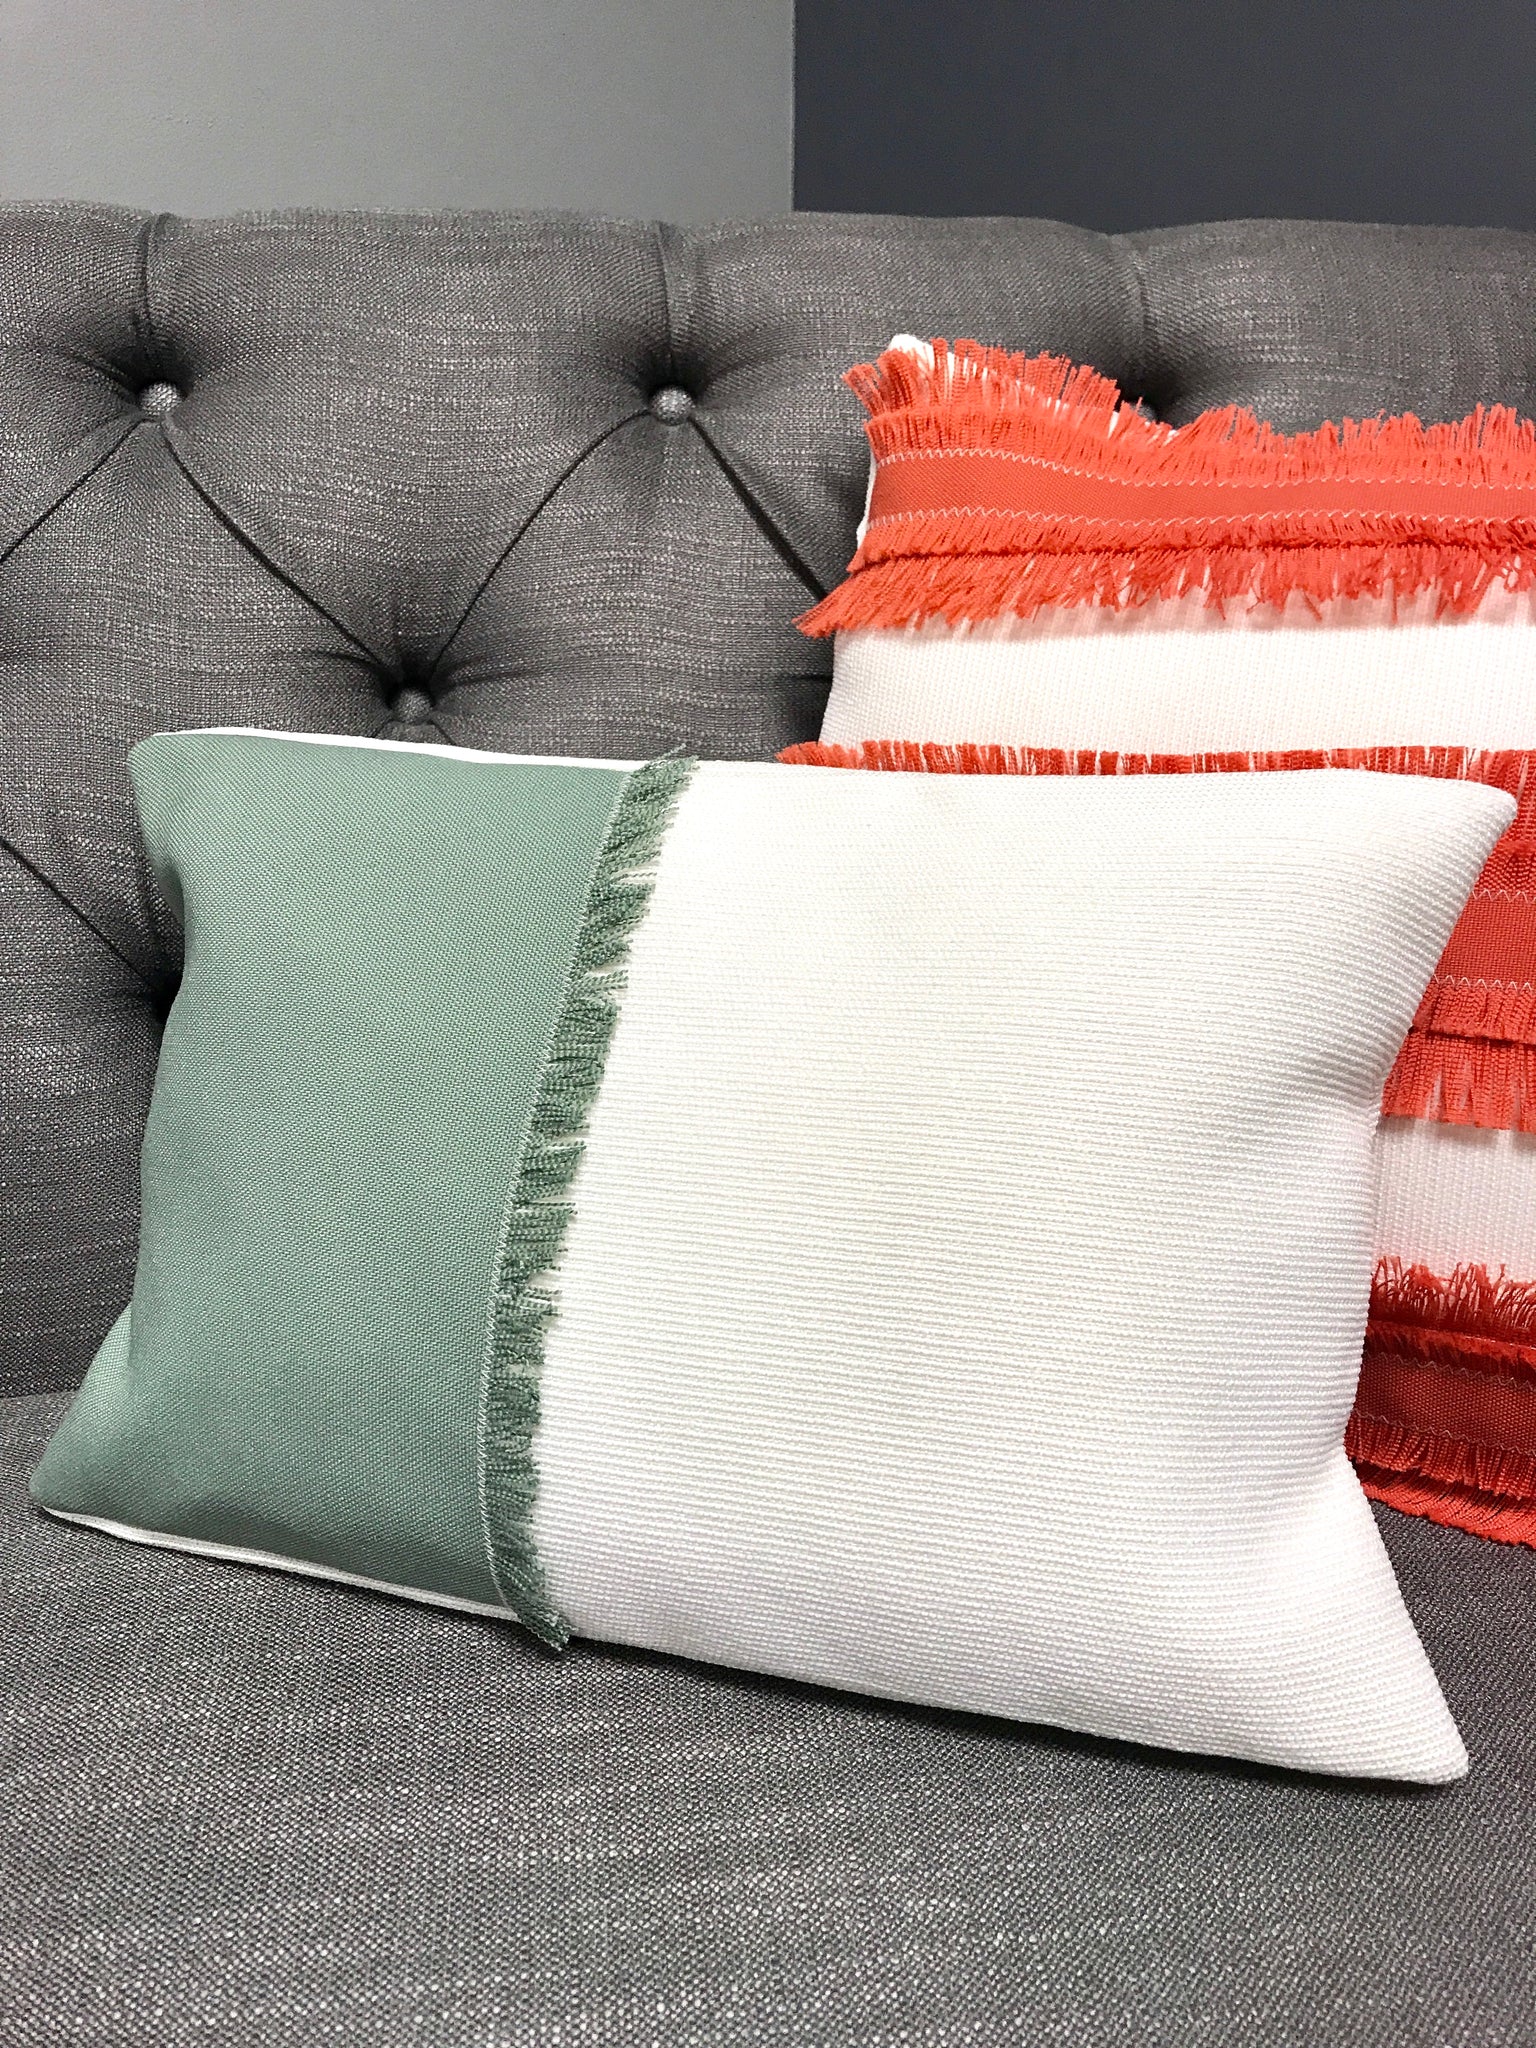 DIY Tassel Pillow with Scrap Fabric Filling